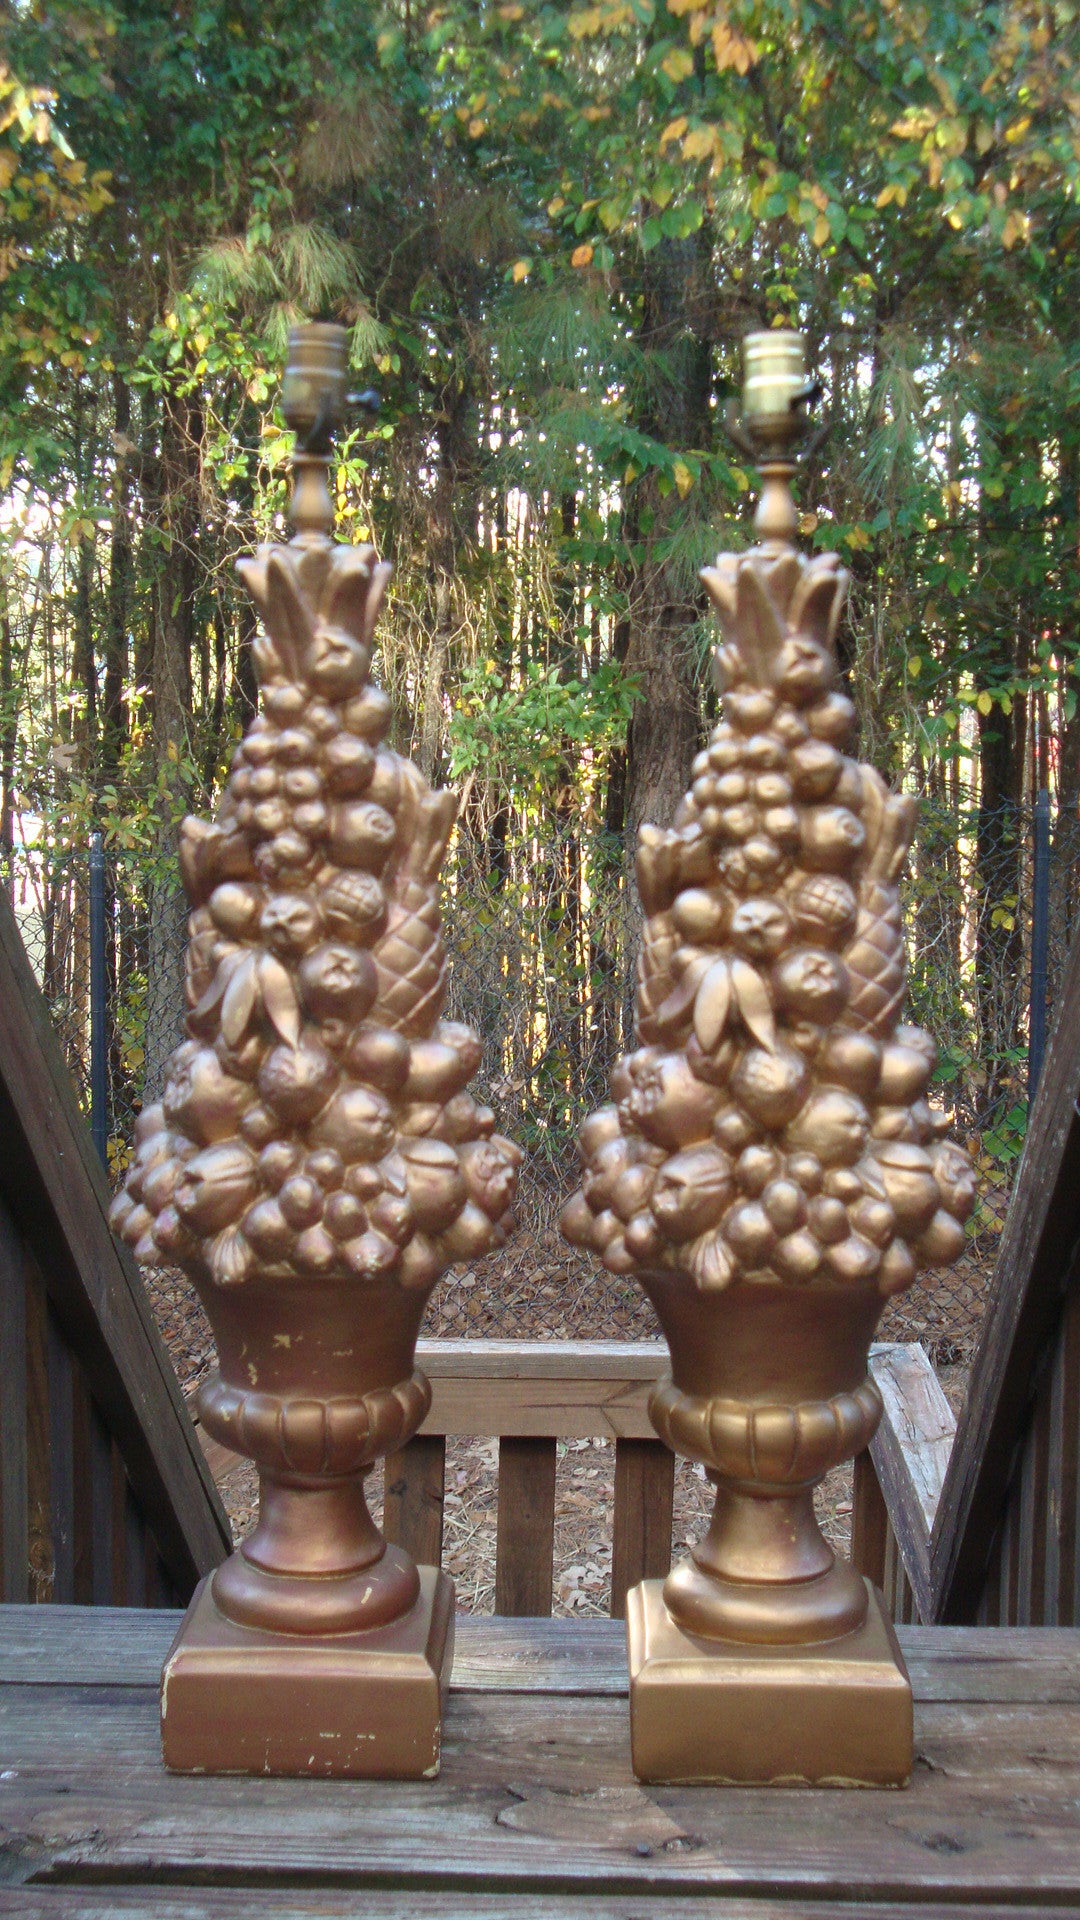 Monumental Hollywood Regency MONUMENTAL Art Deco GOLD FRUIT LAMPS - Pair of 2 Abby Essie